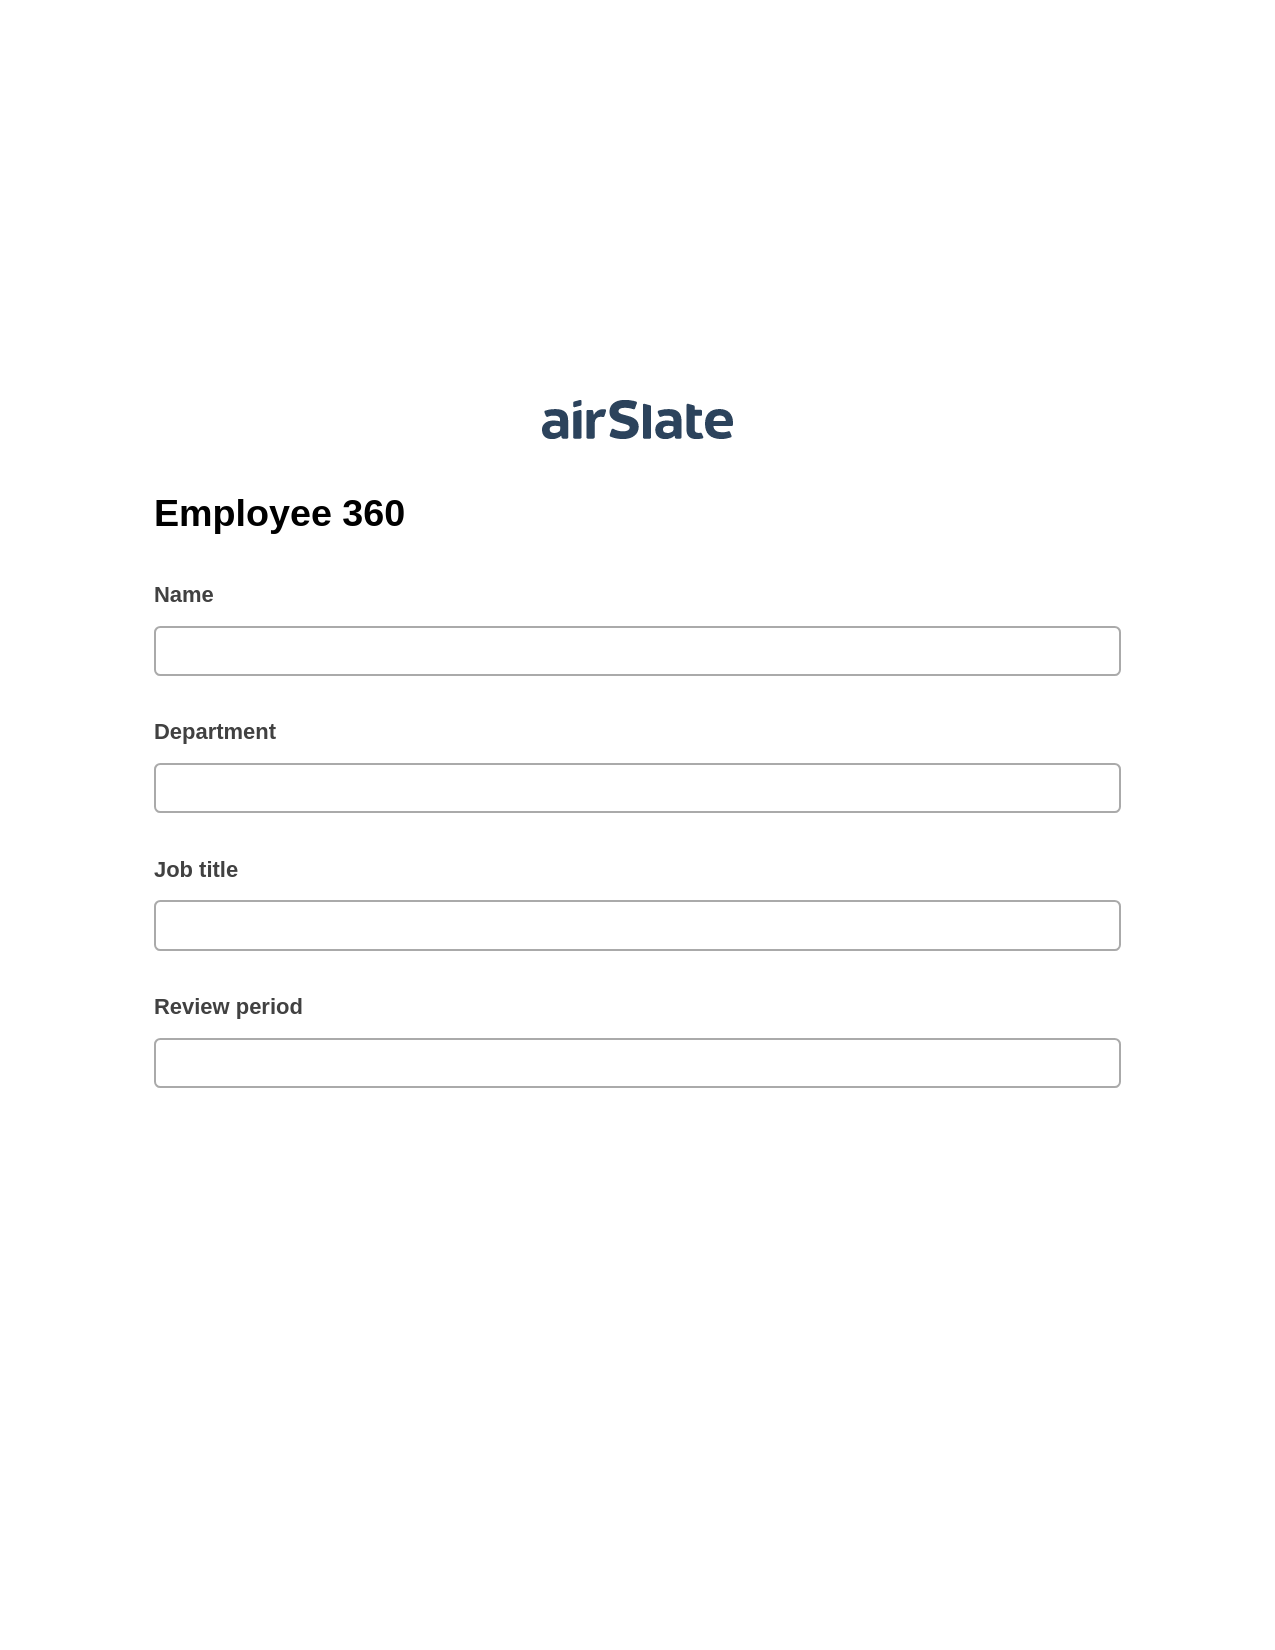 Employee 360 Pre-fill from Excel Spreadsheet Bot, Remove Slate Bot, Webhook Postfinish Bot